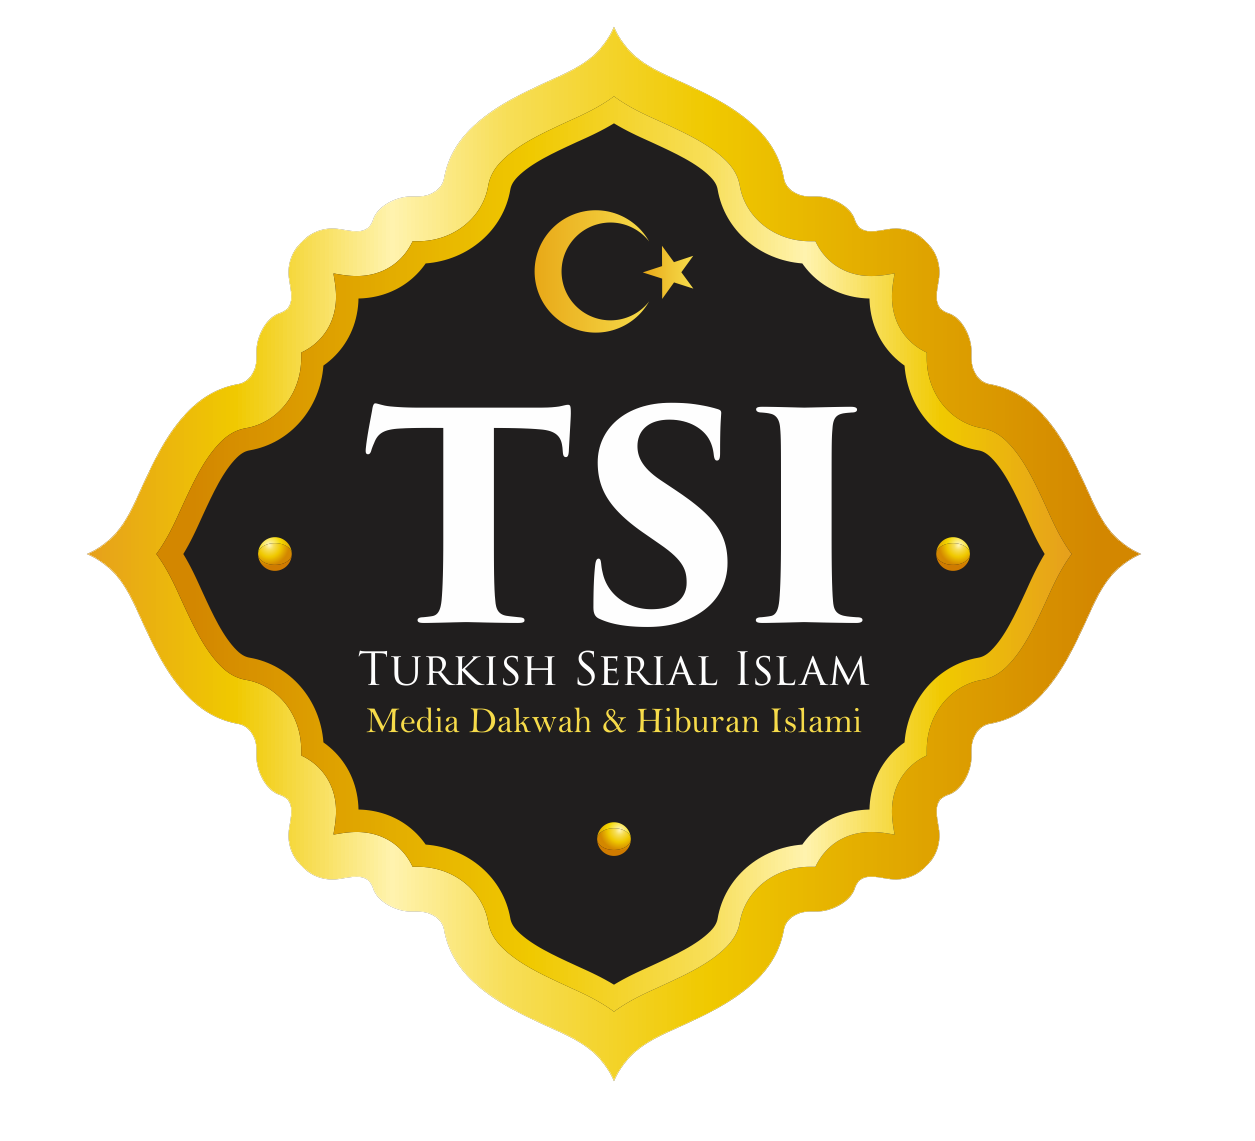 VIP – TURKISH SERIAL ISLAM